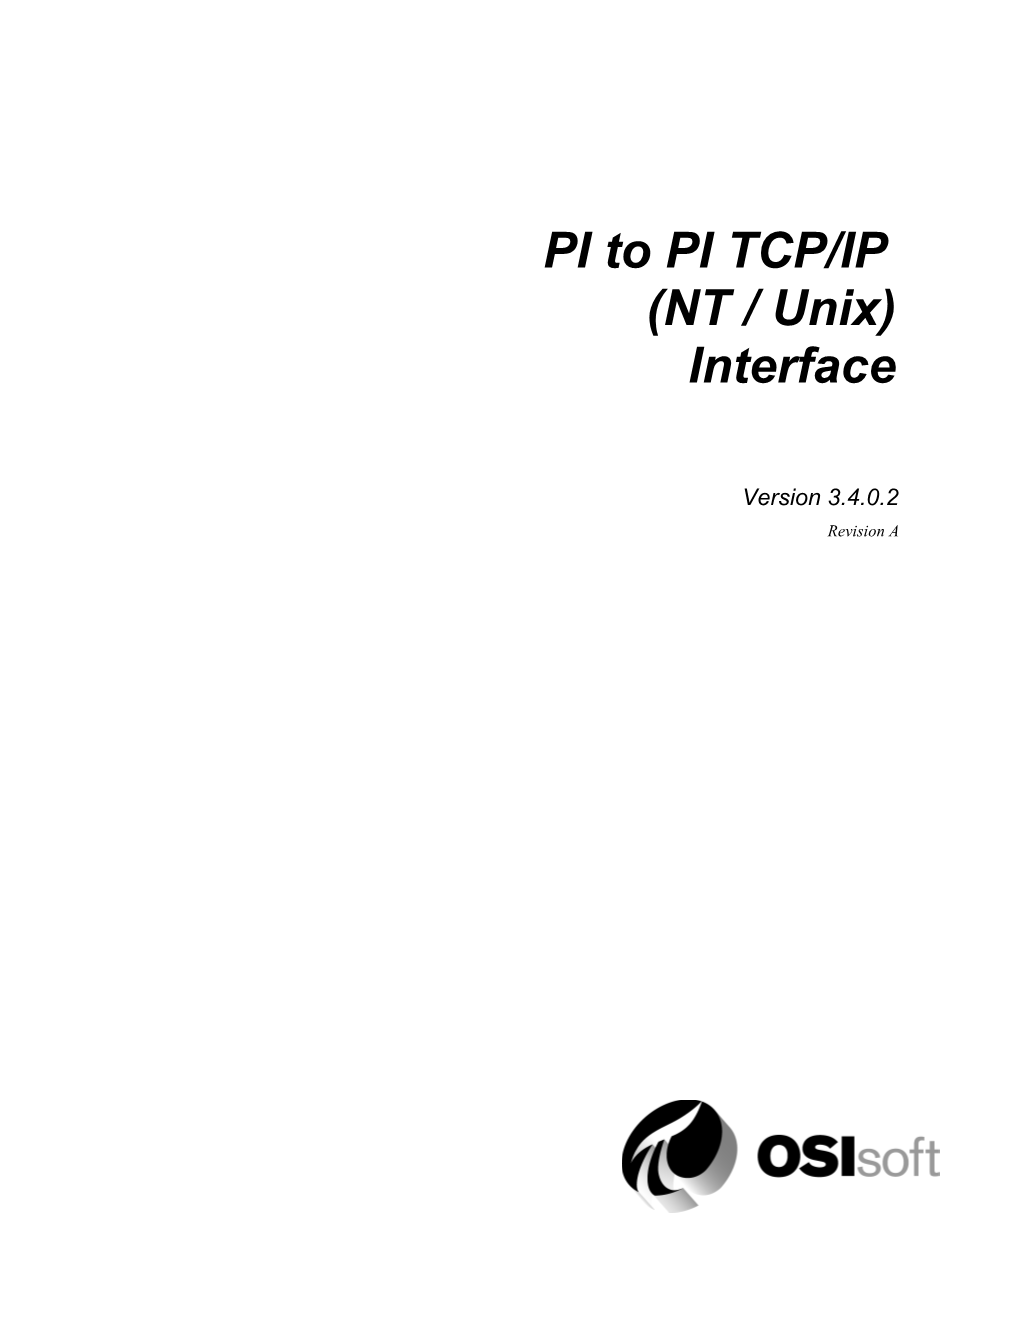 PI to PI TCP/IP (NT / Unix) Interface